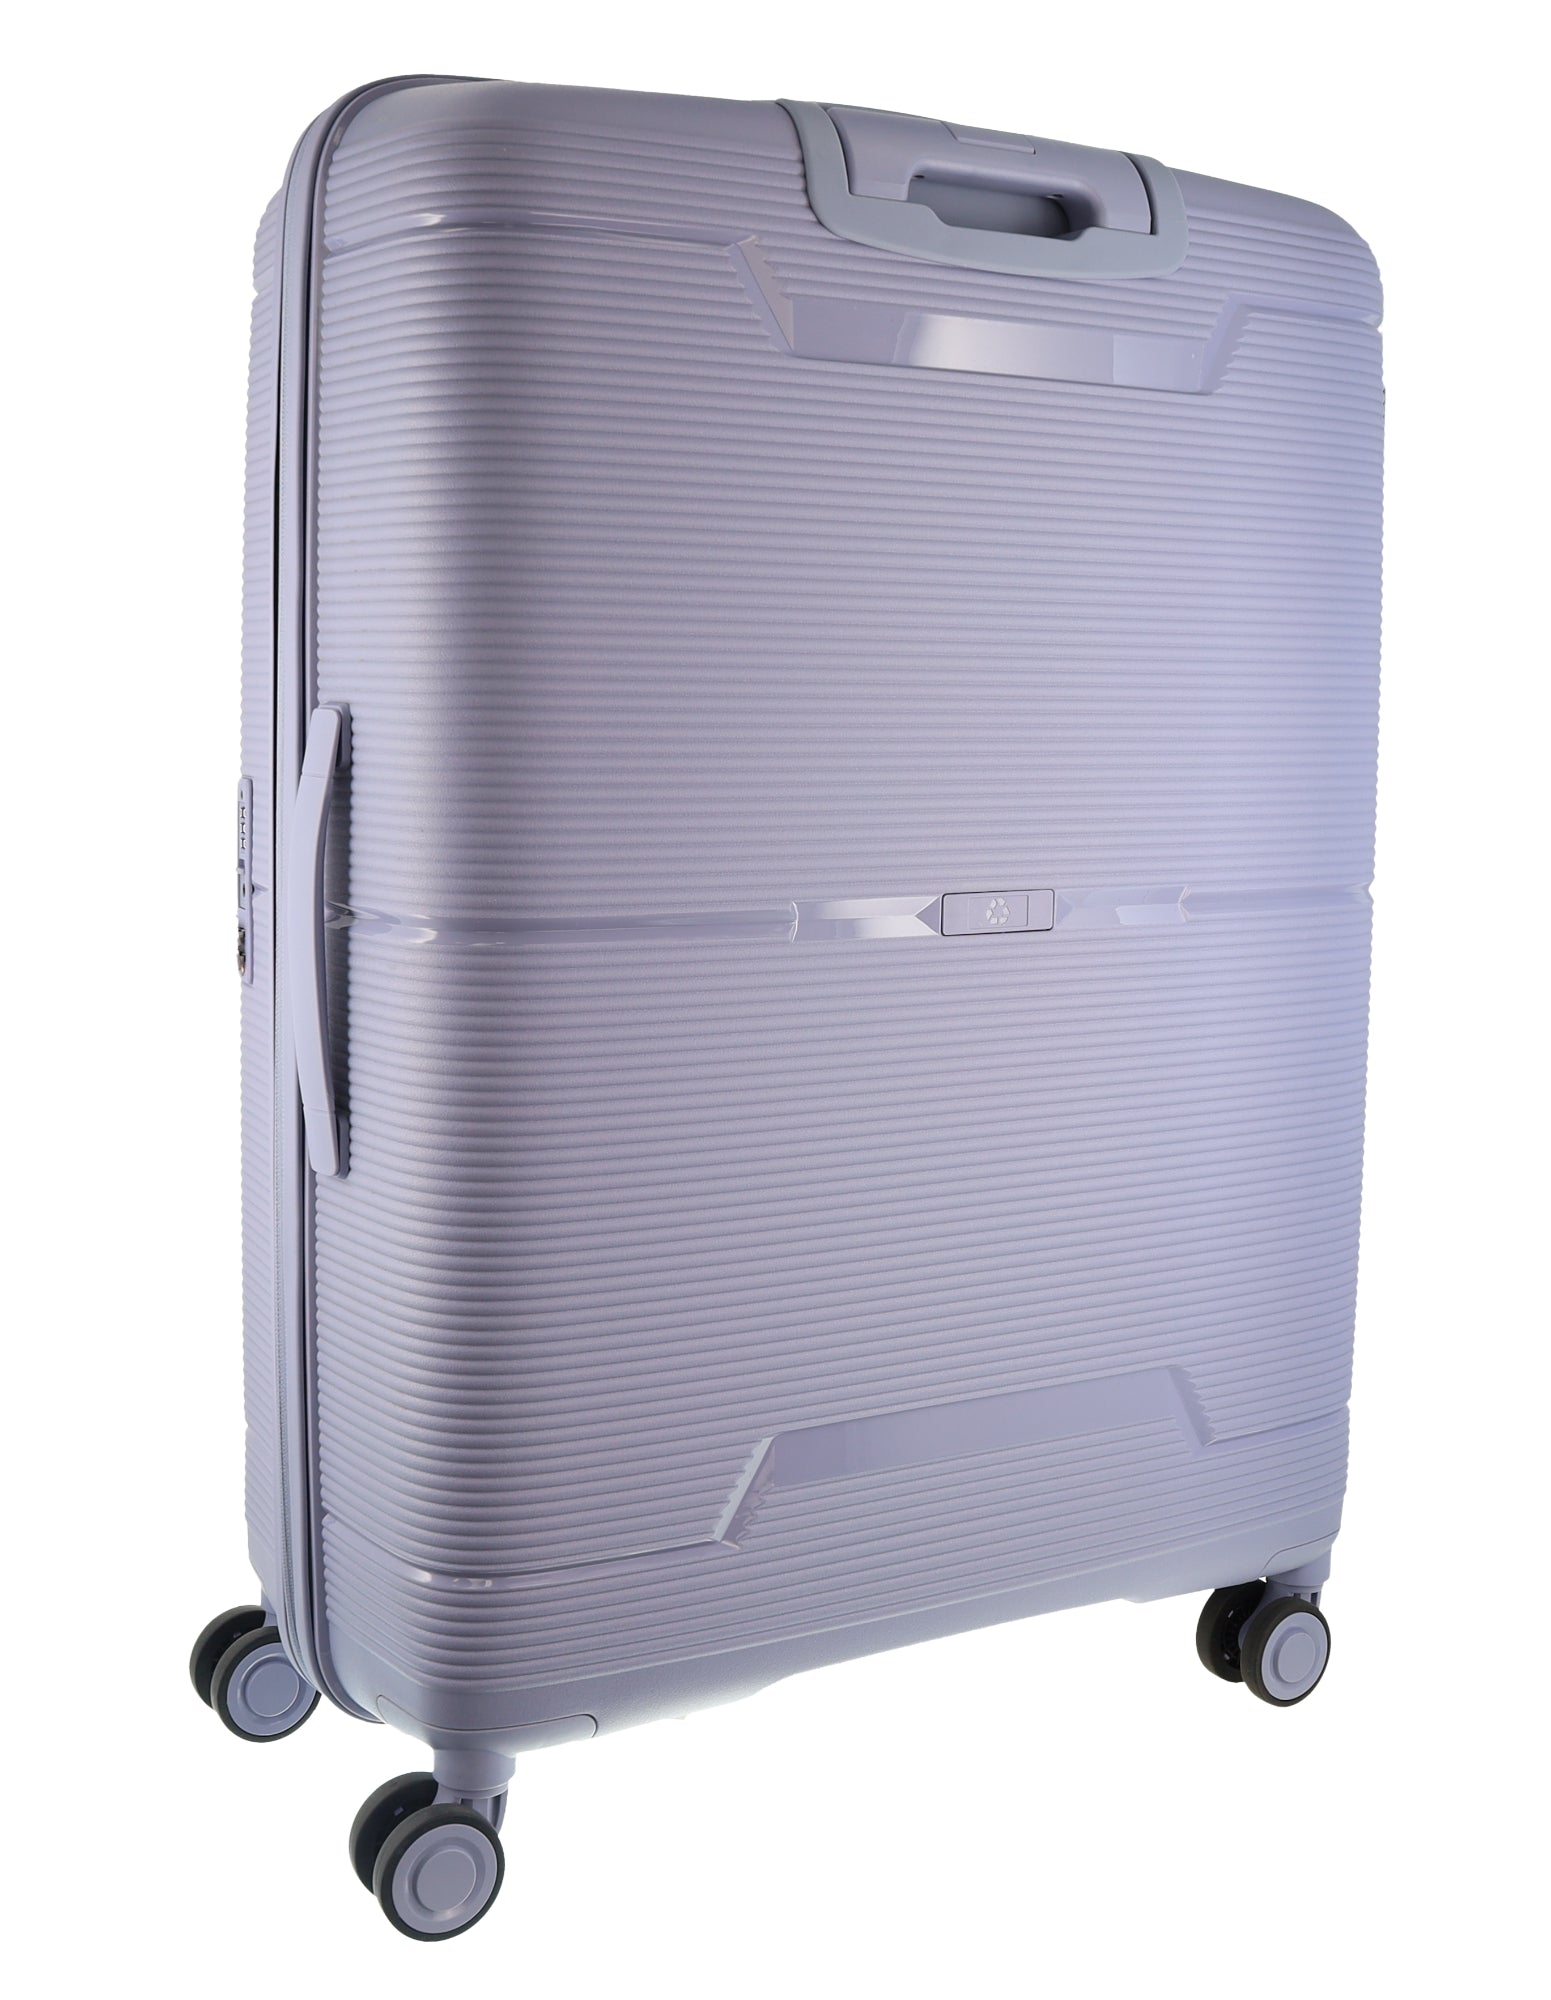 Pierre Cardin 69cm MEDIUM Hard Shell Suitcase in Graphite